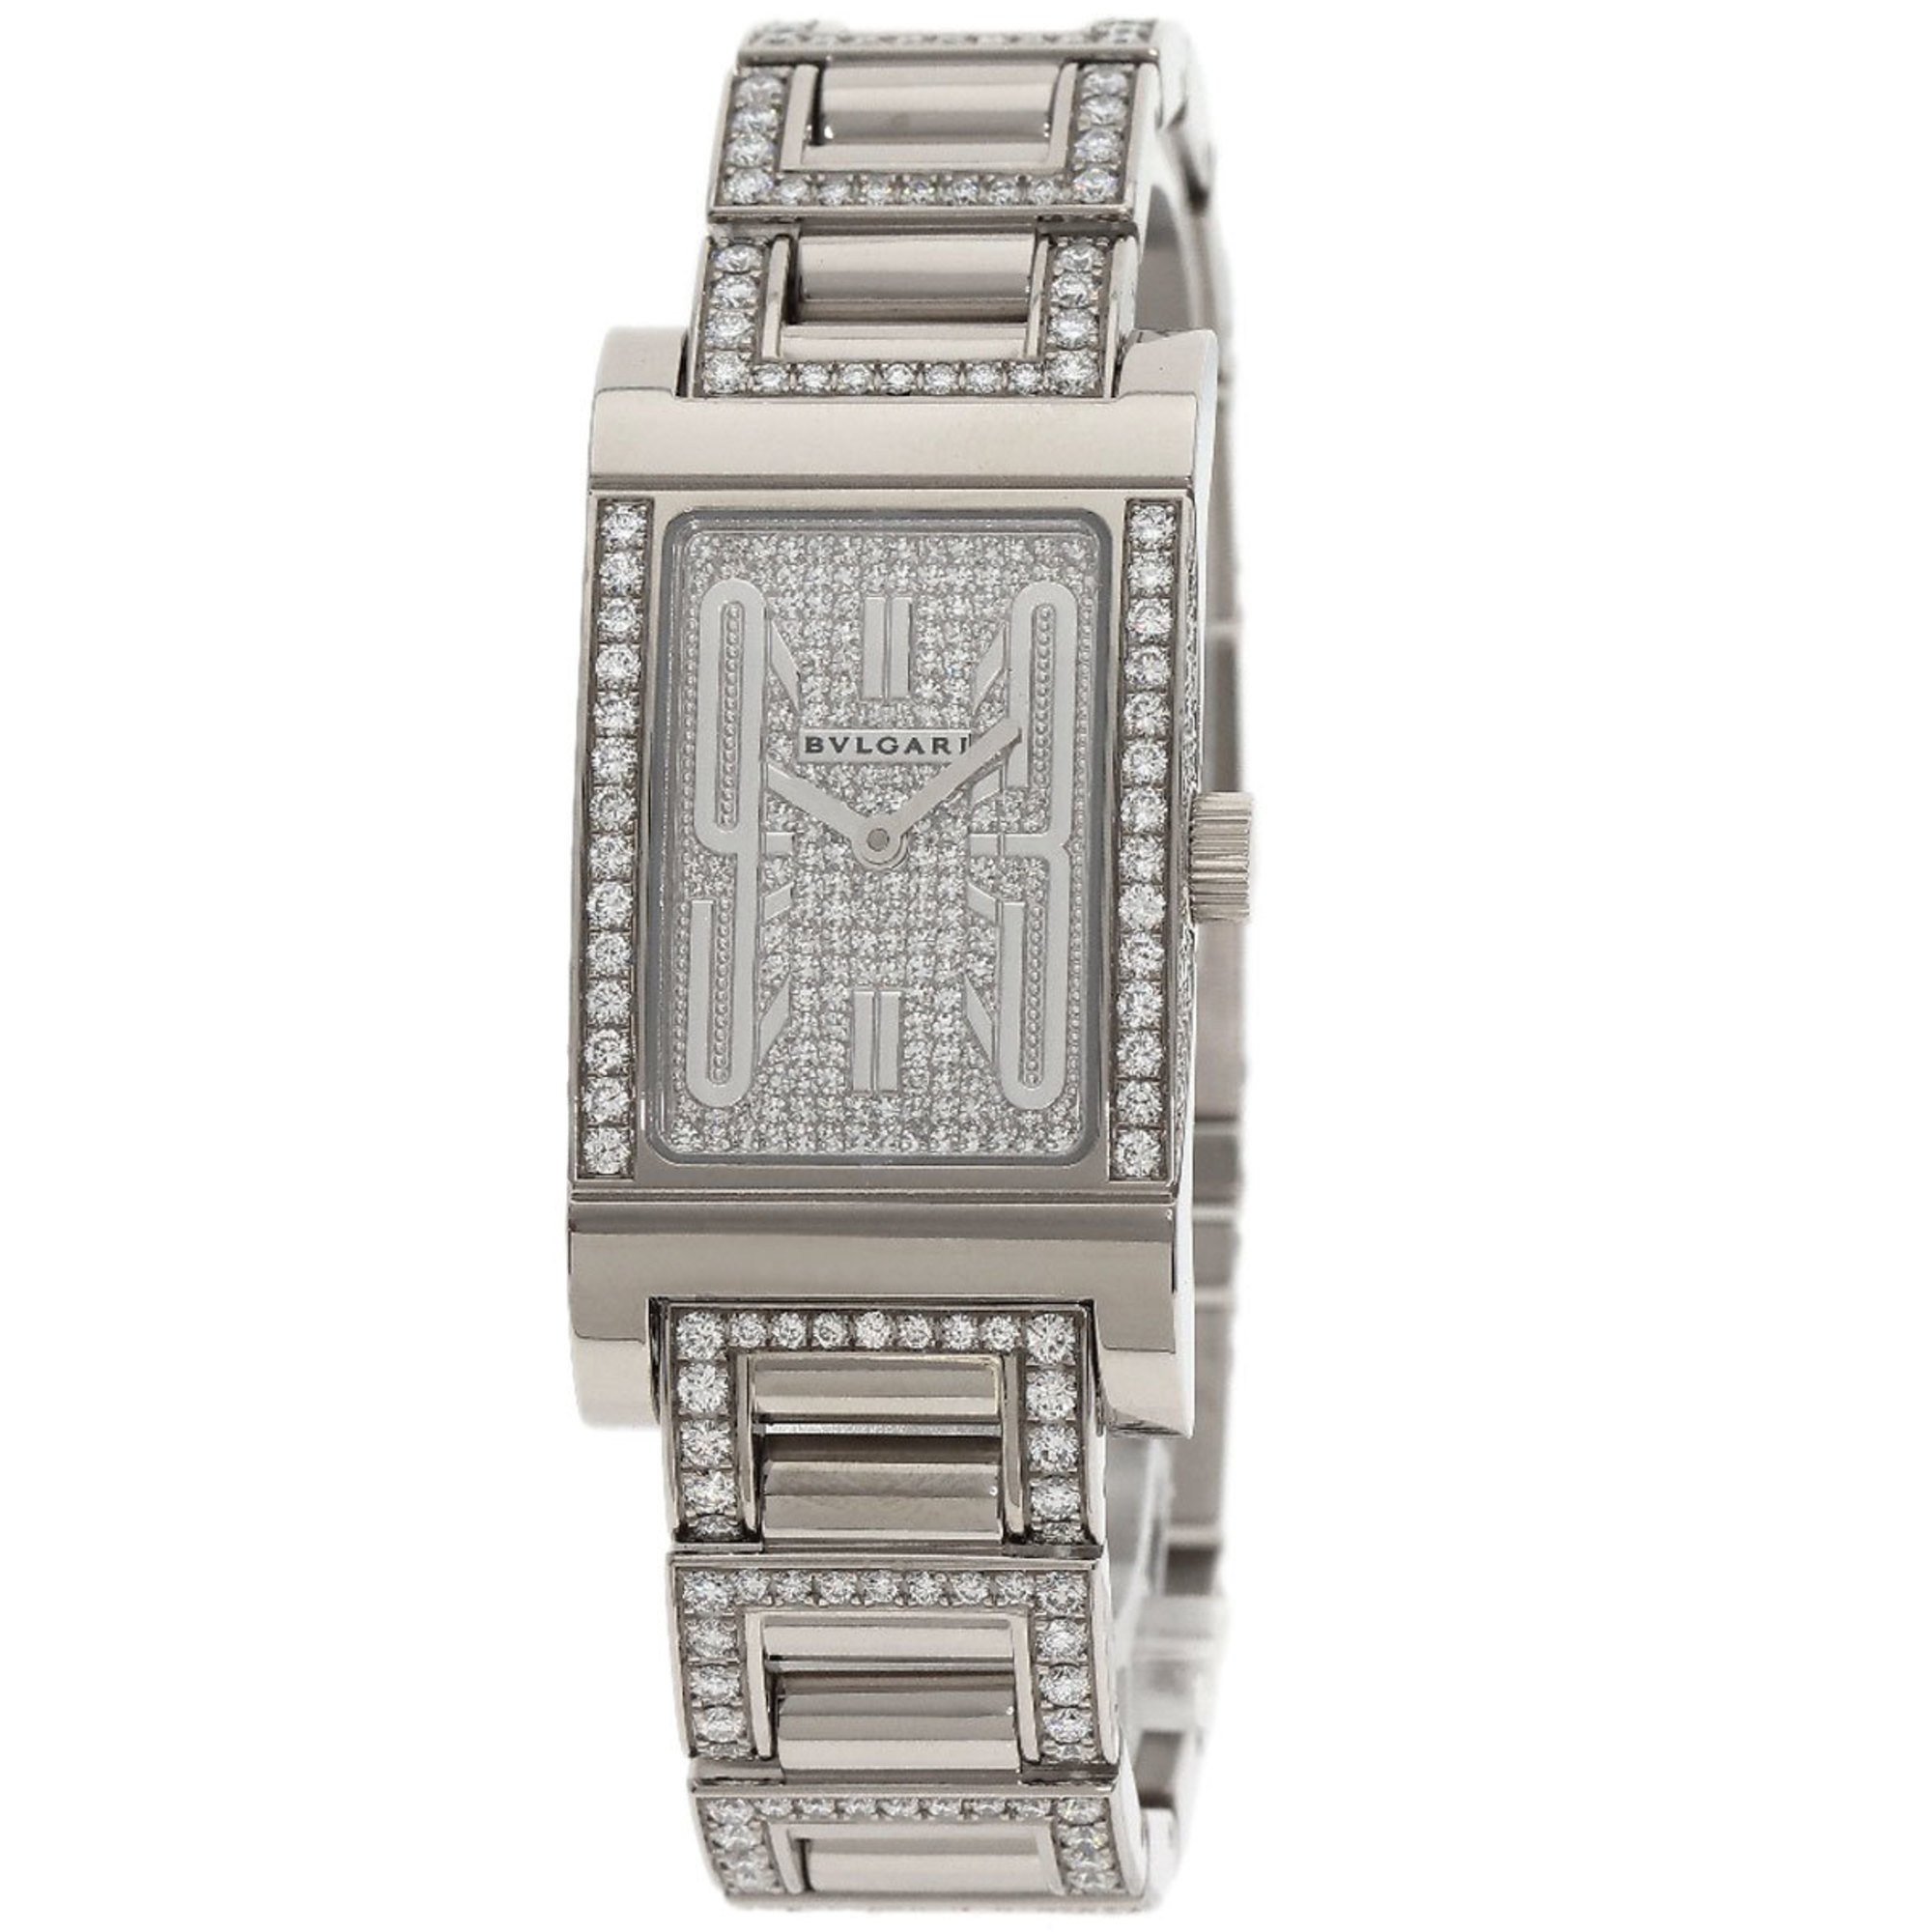 BVLGARI RTW39G Rettangolo Diamond Watch, K18 White Gold/K18WG x Diamond, Women's